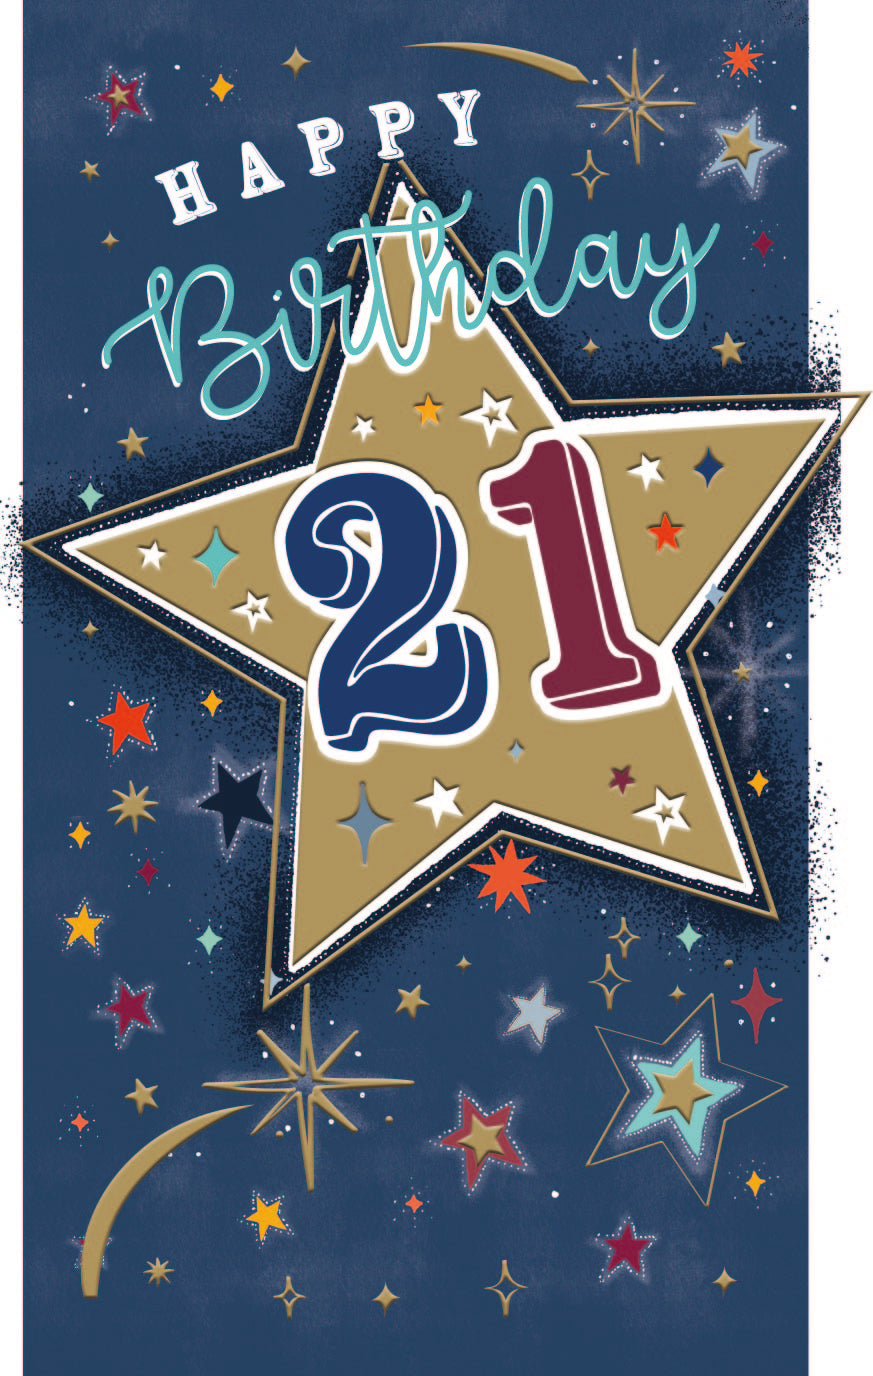 21st birthday card - bold star